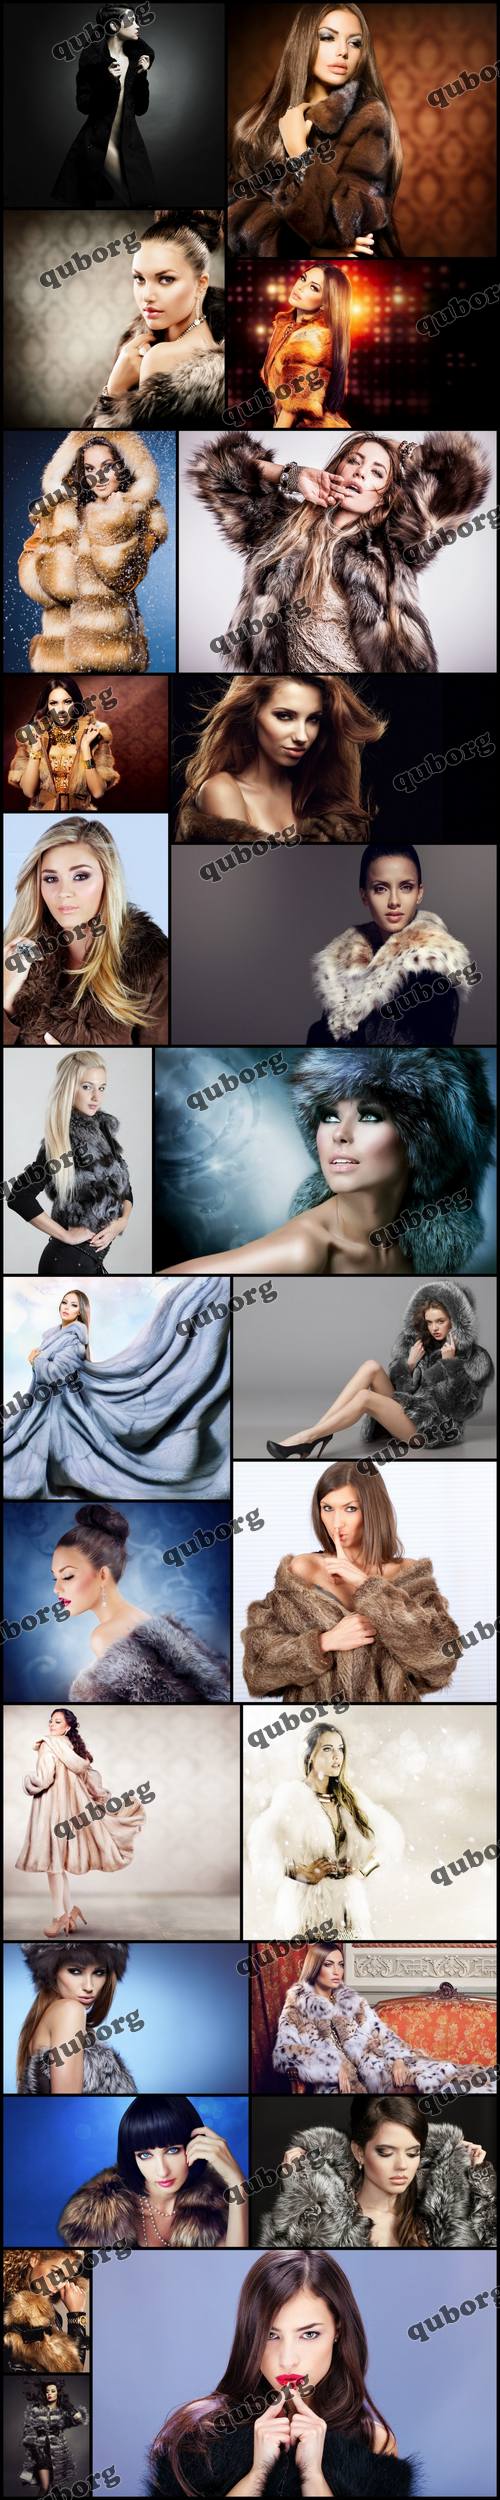 Stock Photos - Girls in Fur Coat